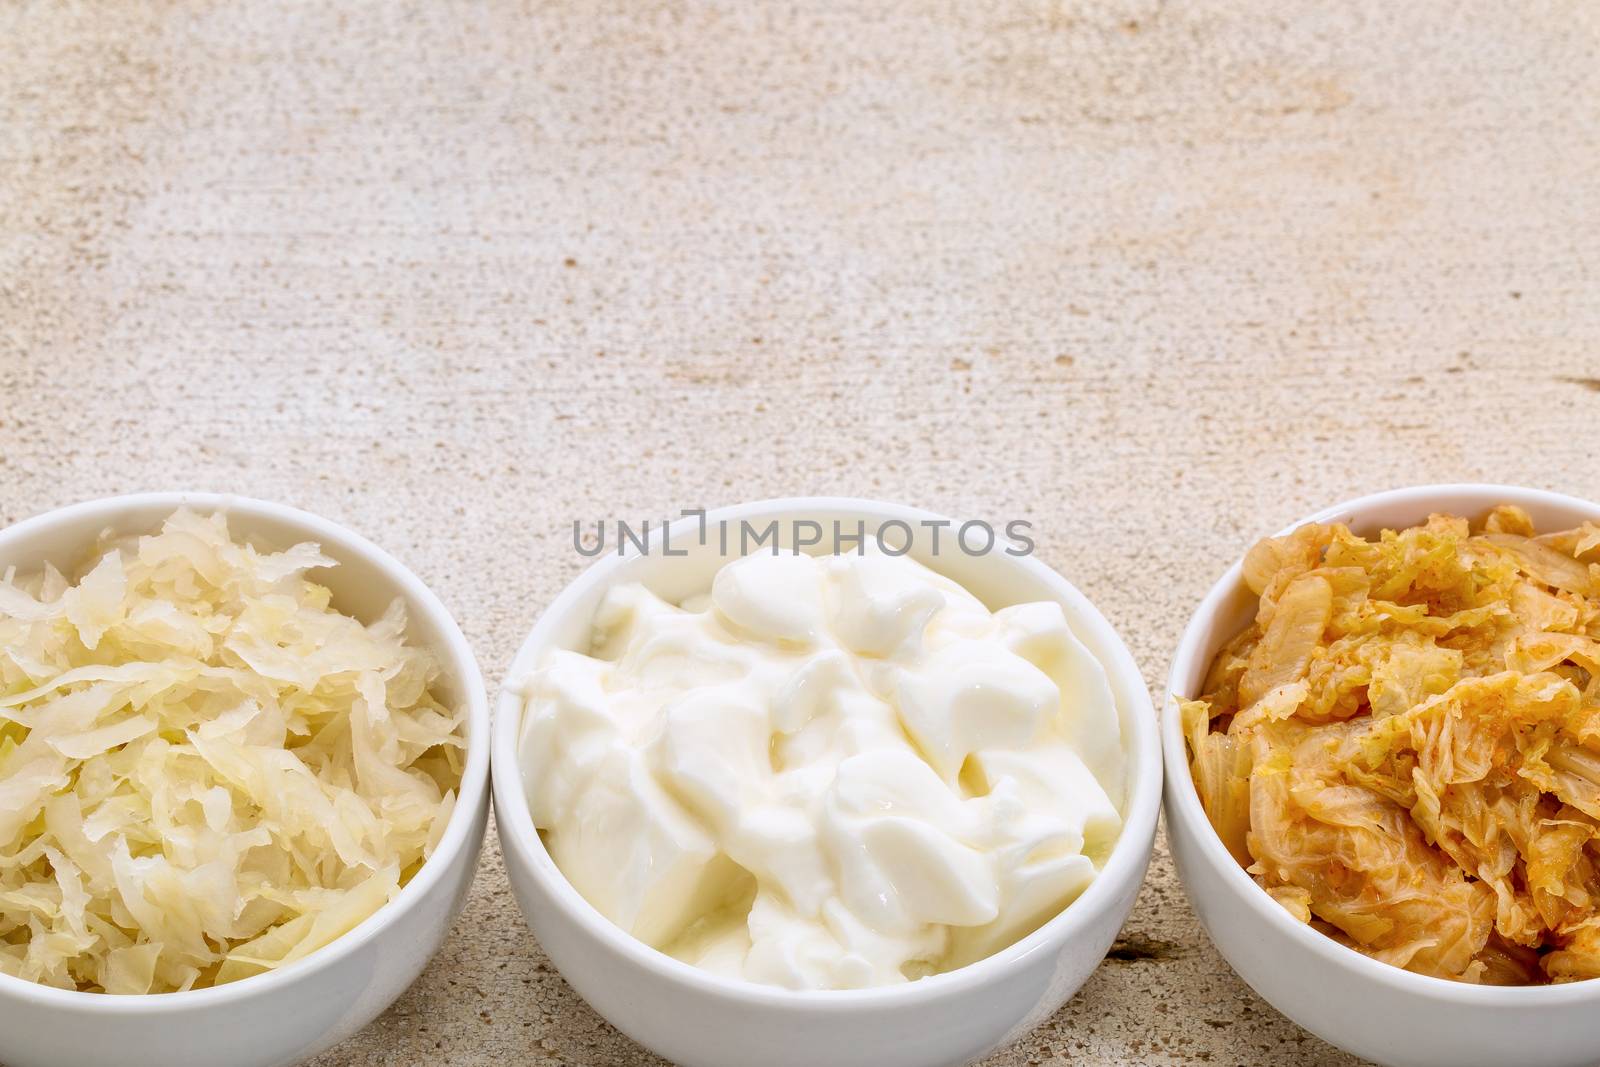 sauerkraut, kimchi and yogurt by PixelsAway